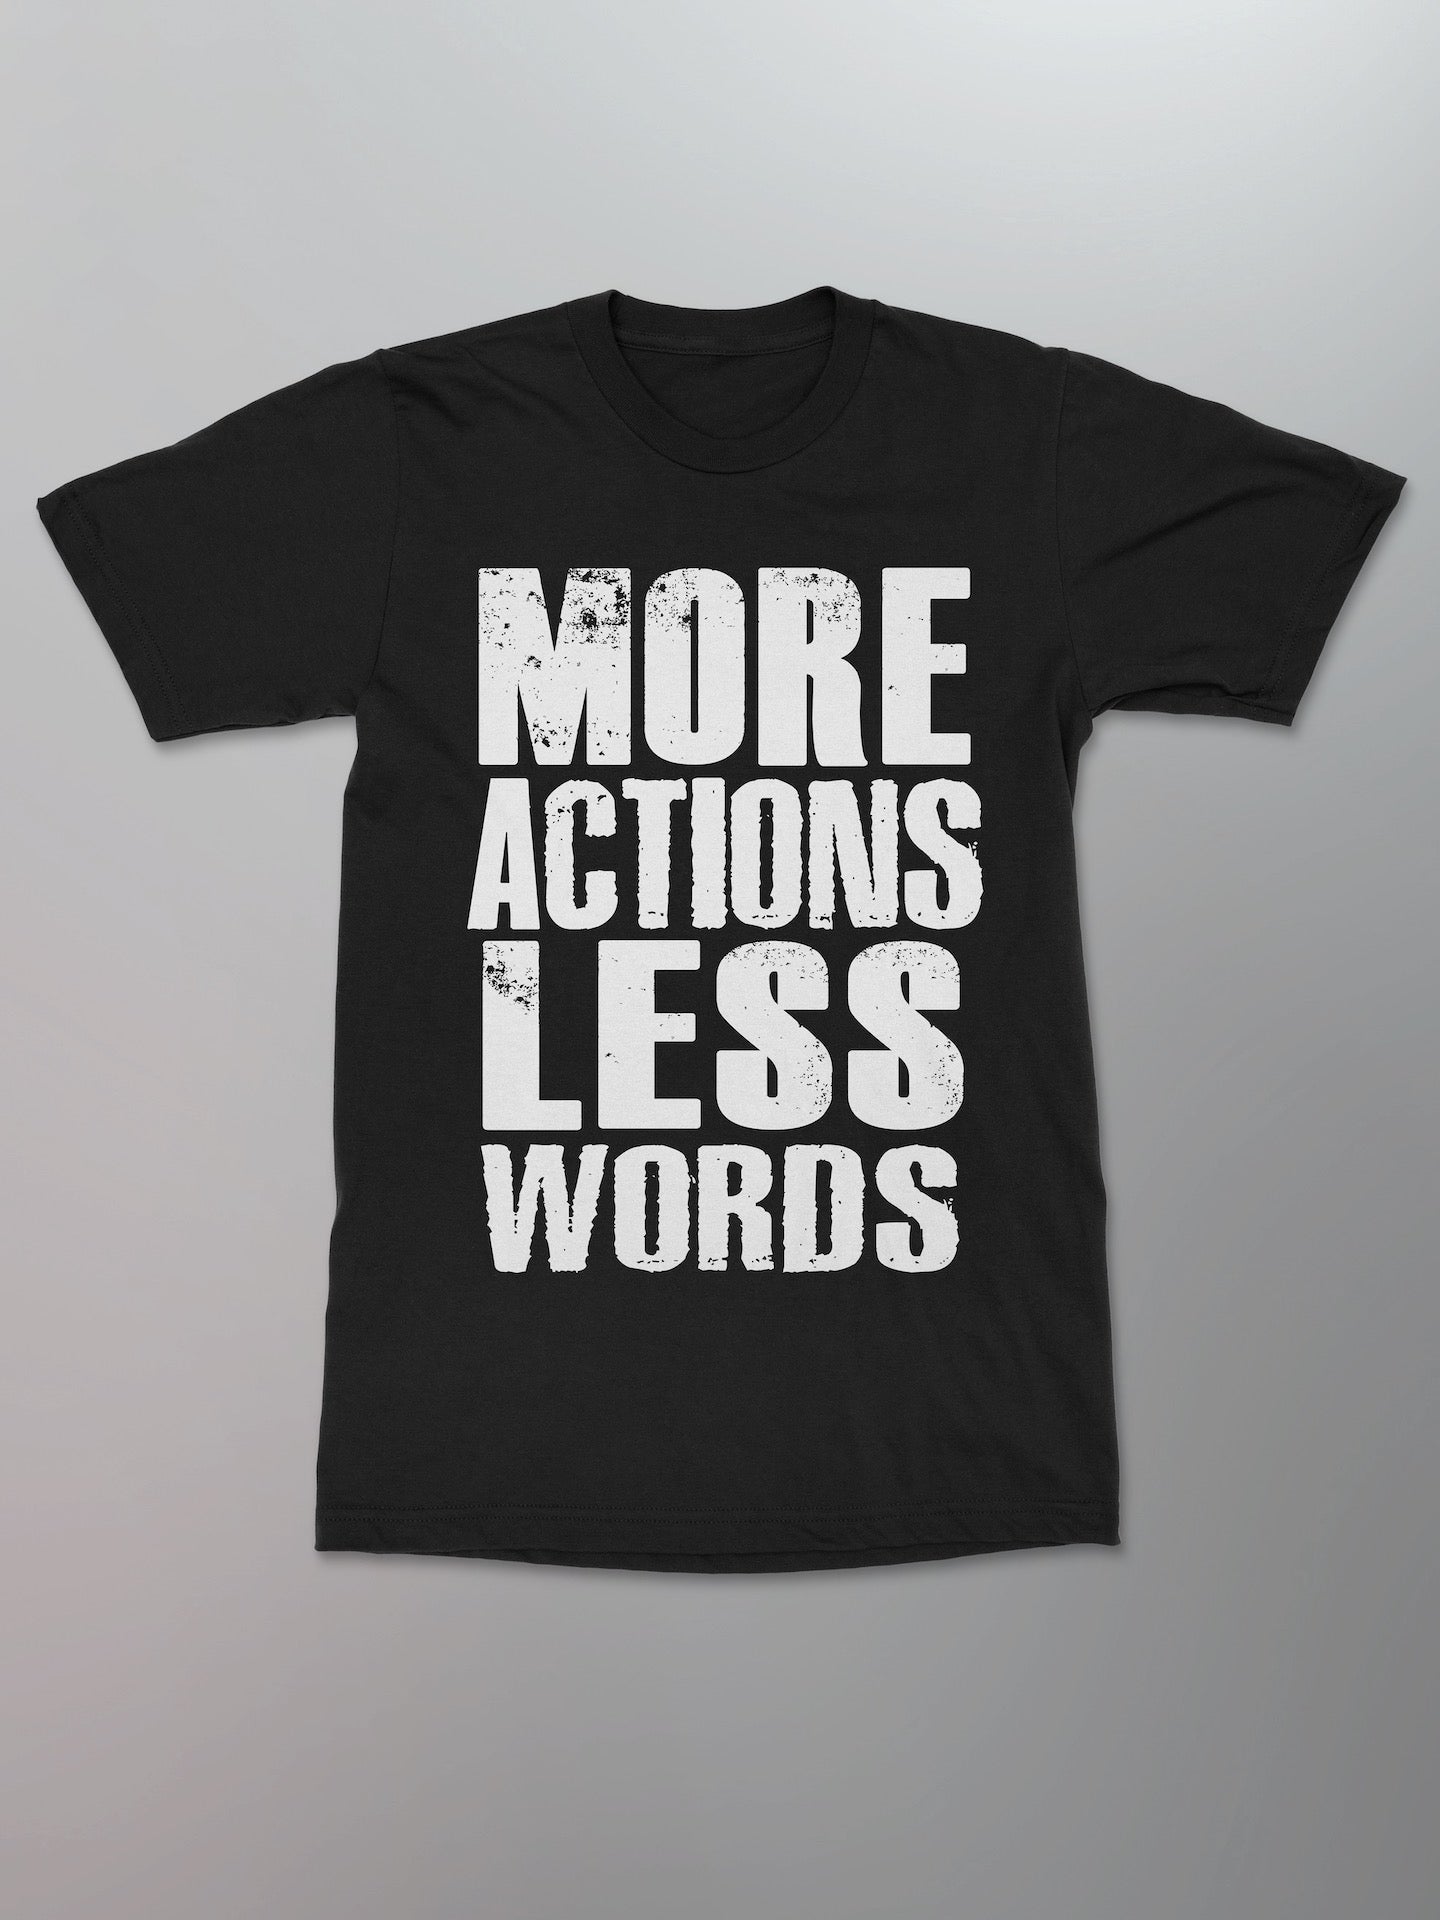 Celldweller - More Actions, Less Words Shirt